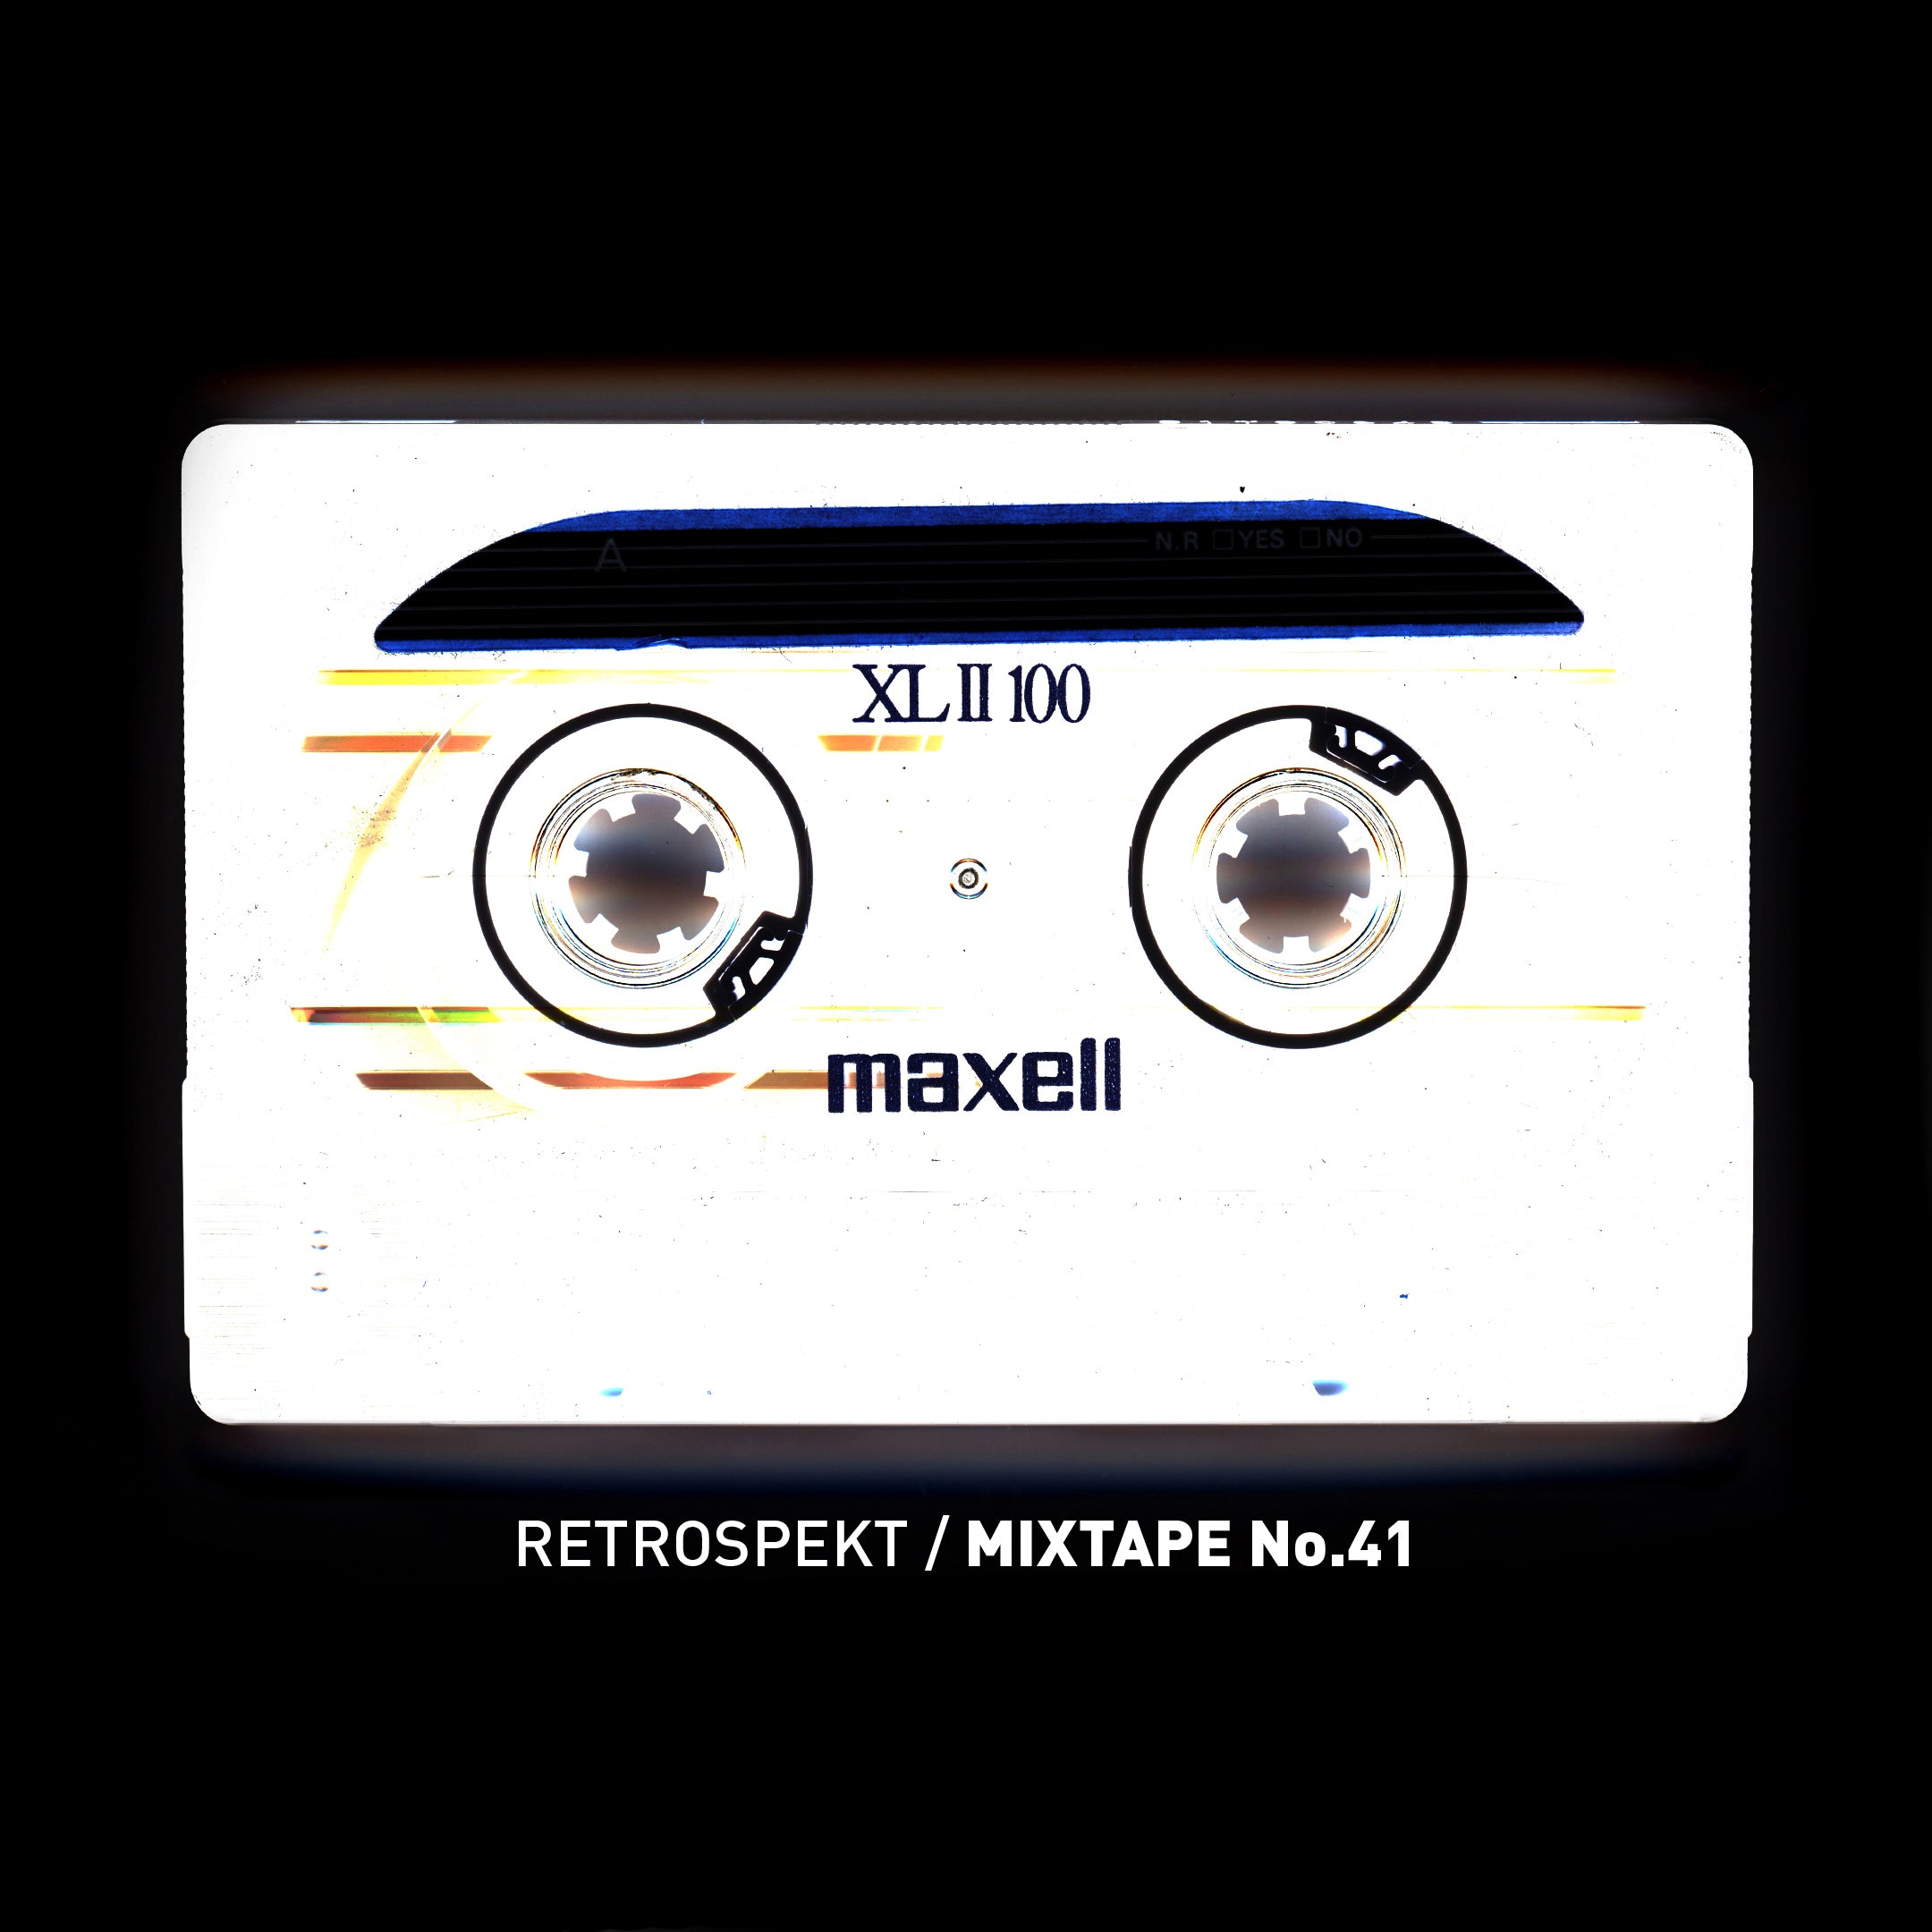 Retrospekt Mixtape No. 41